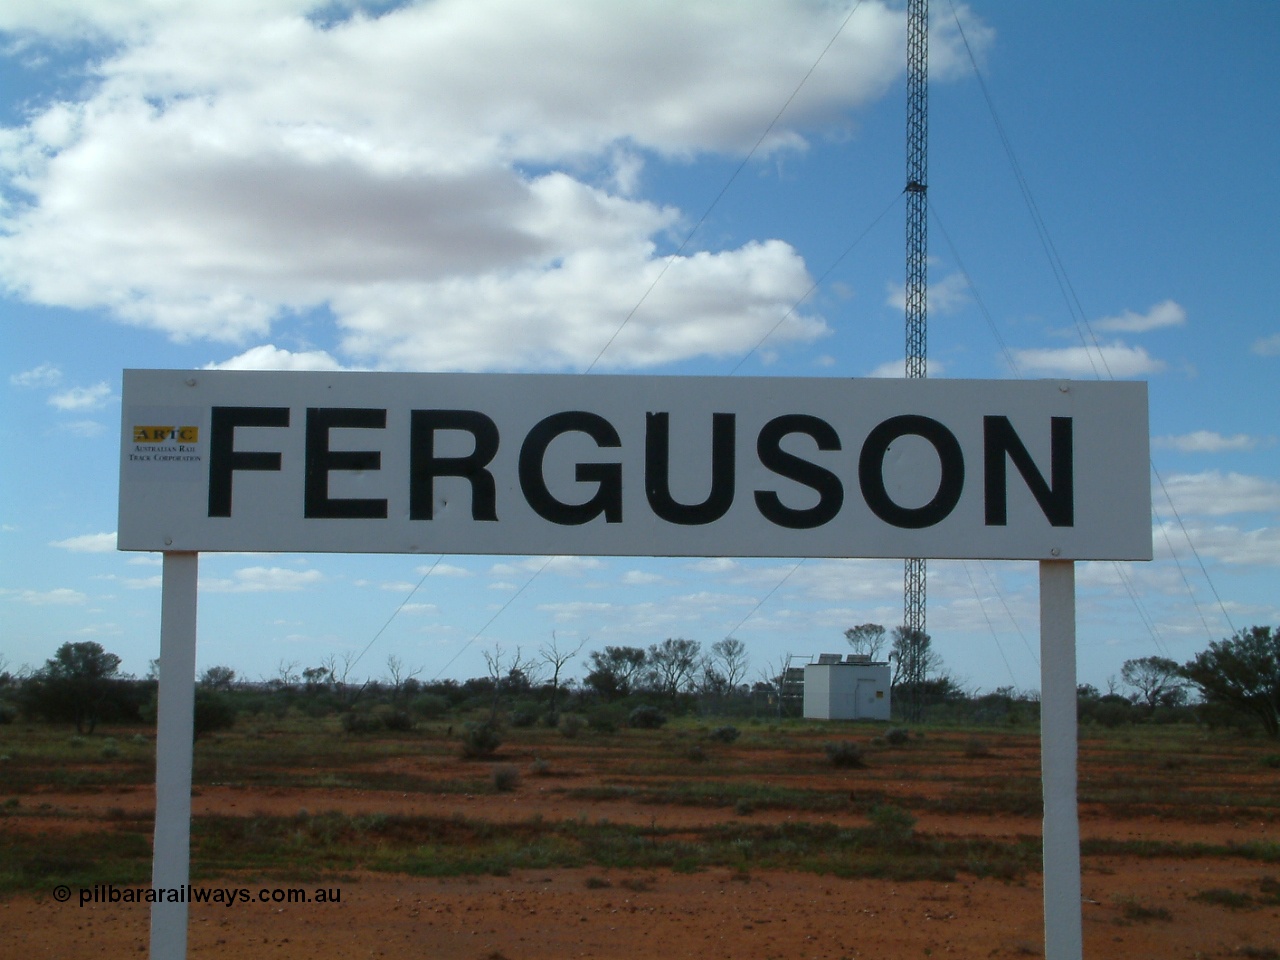 030415 150535
Ferguson, located at the 469 km on the Trans Australian Railway, station nameboard. [url=https://goo.gl/maps/XNaMGCNxZ4yv7Lrr9]GeoData location[/url].
